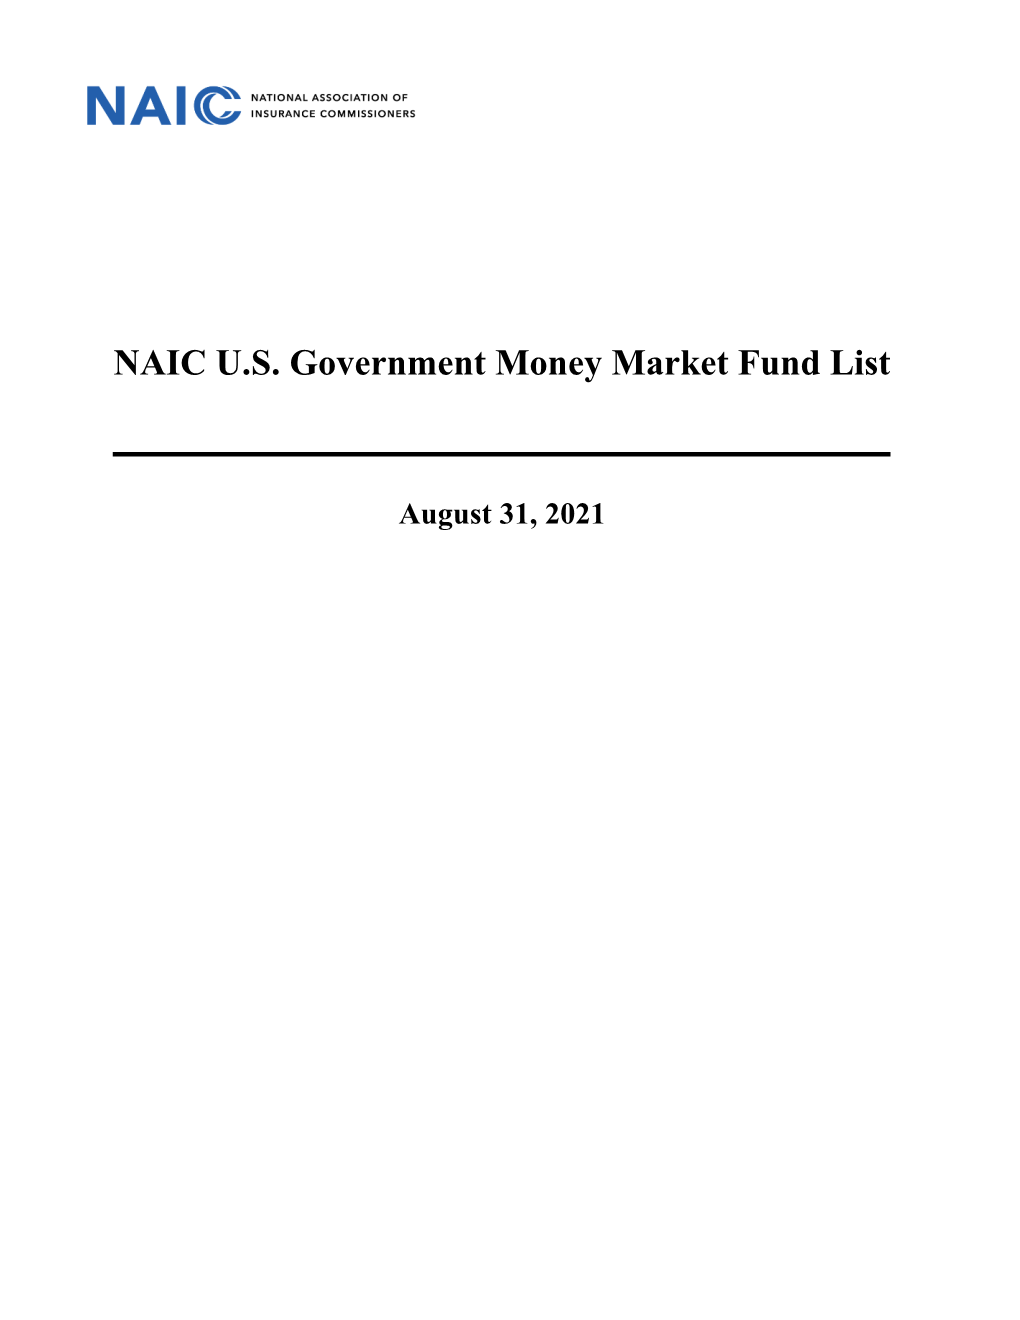 NAIC U.S. Government Money Market Fund List